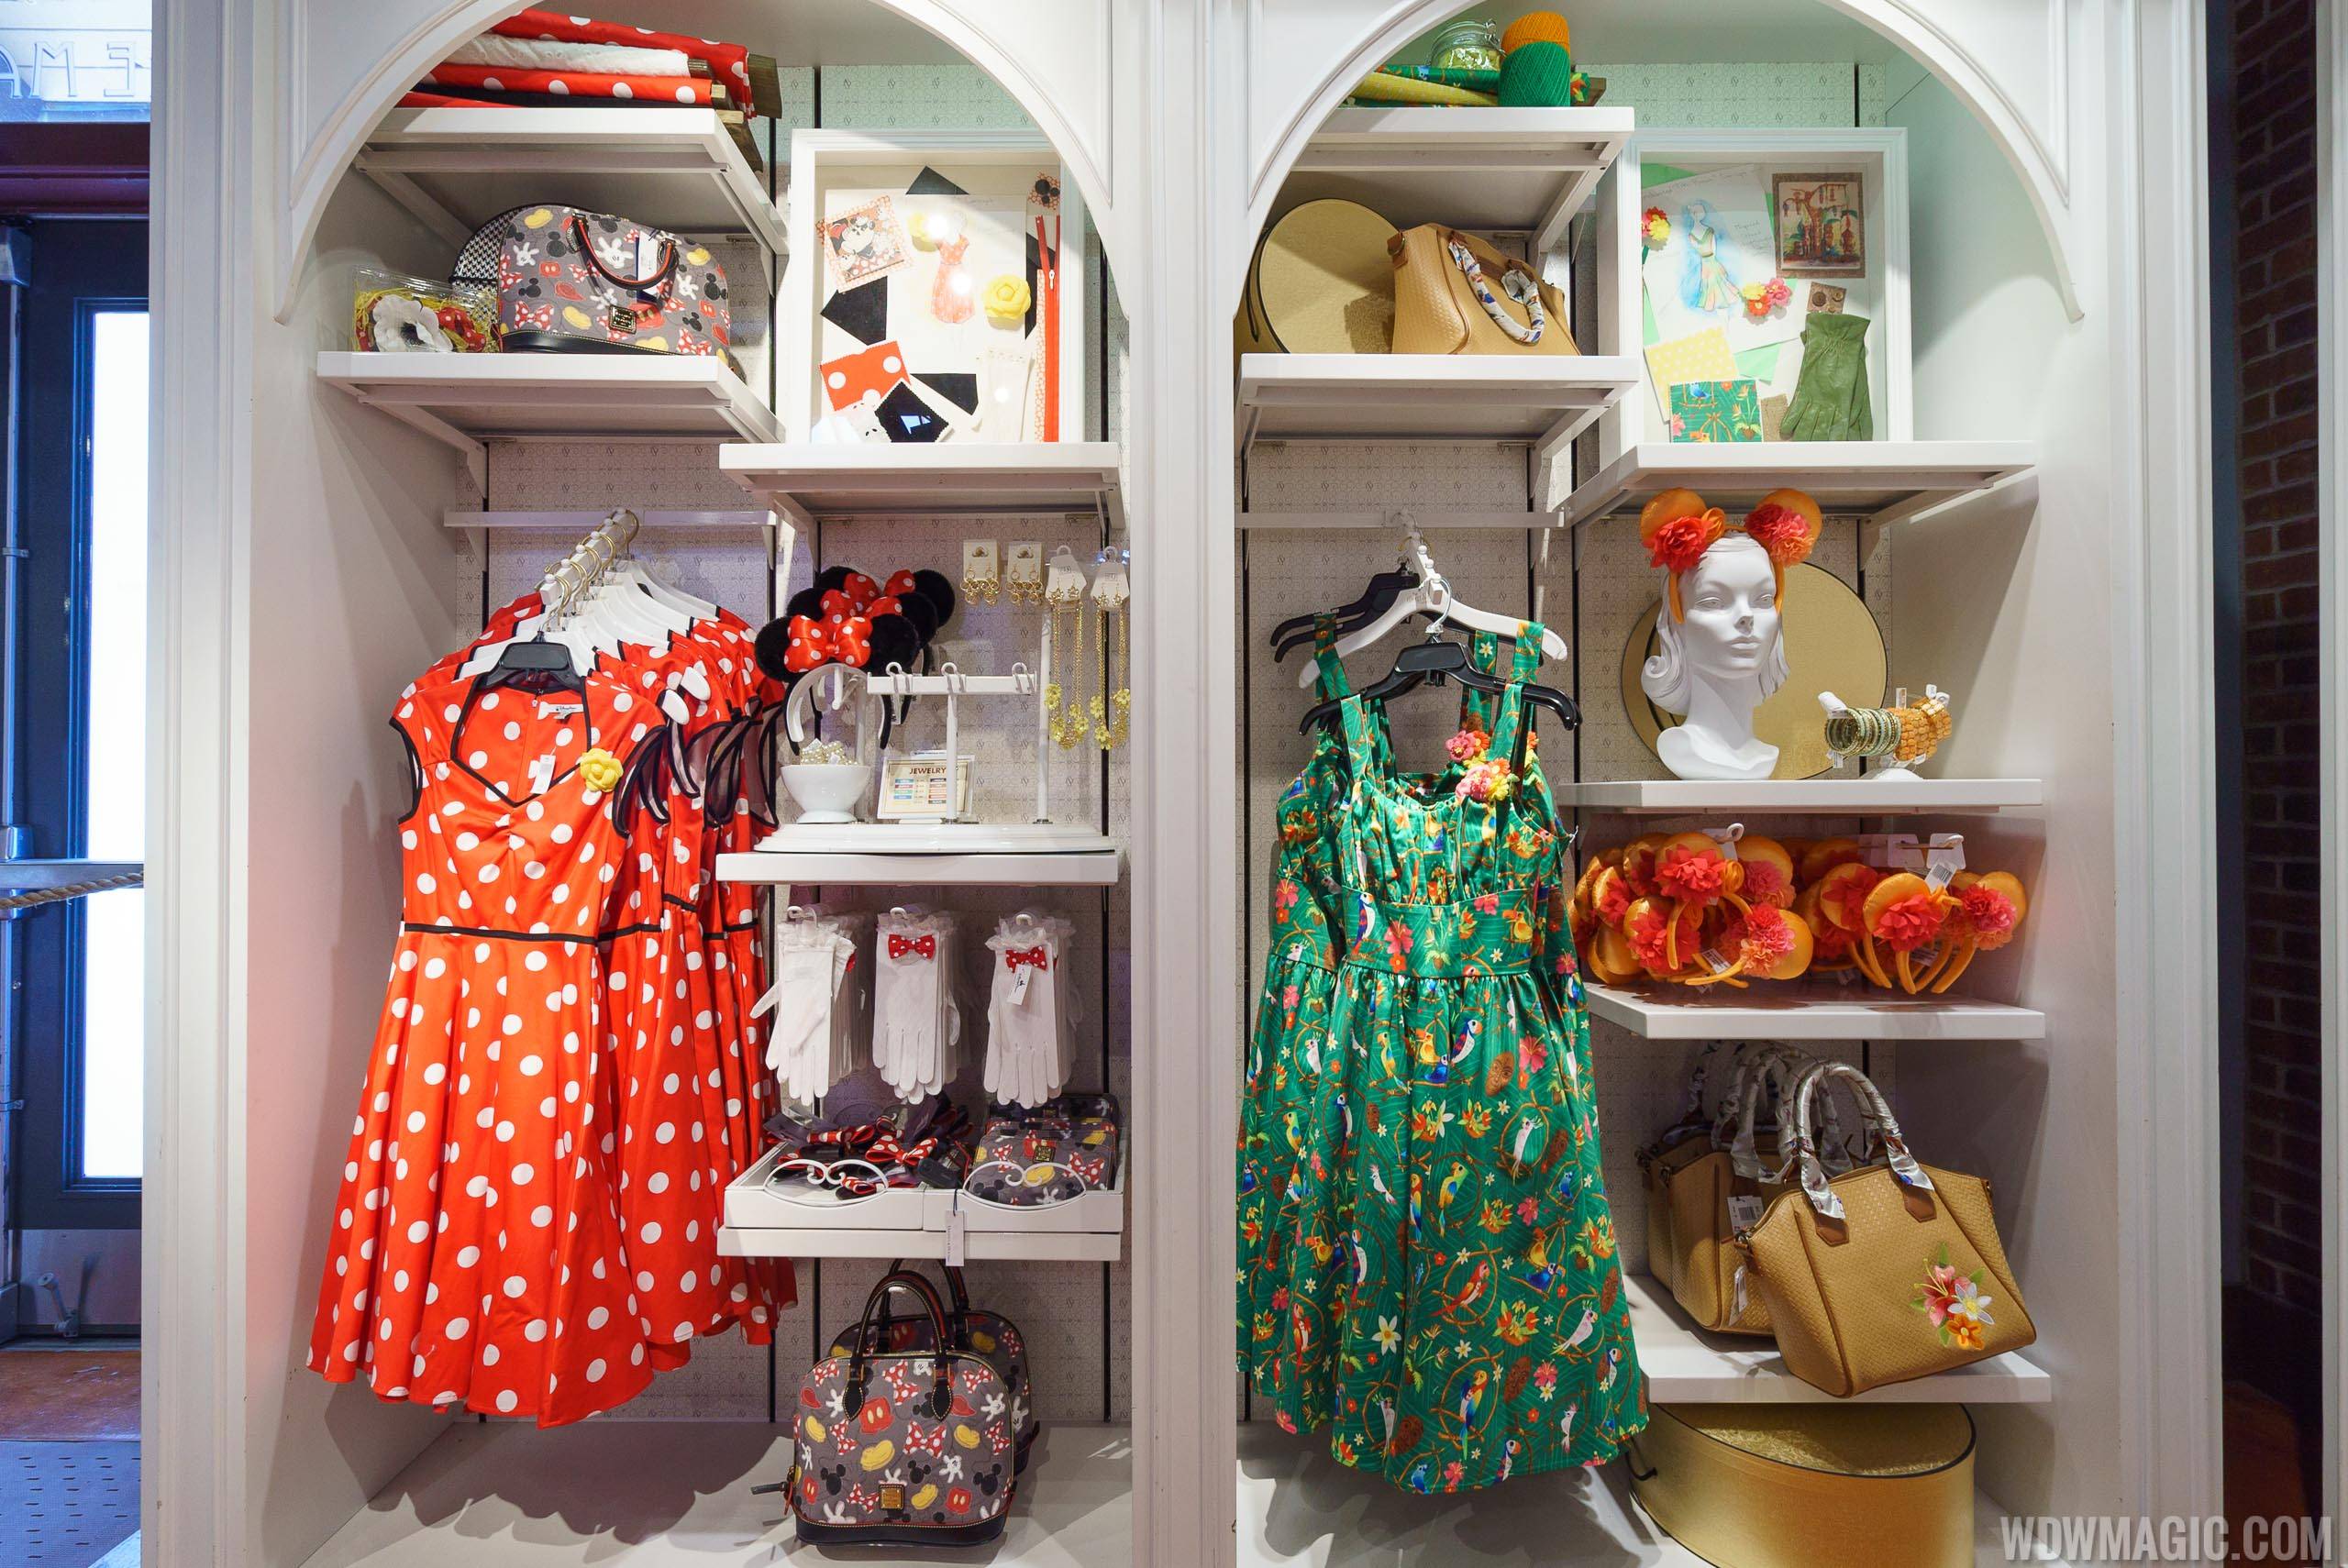 The Dress Shop on Cherry Tree Lane - Minnie Mouse and Tiki Room dress